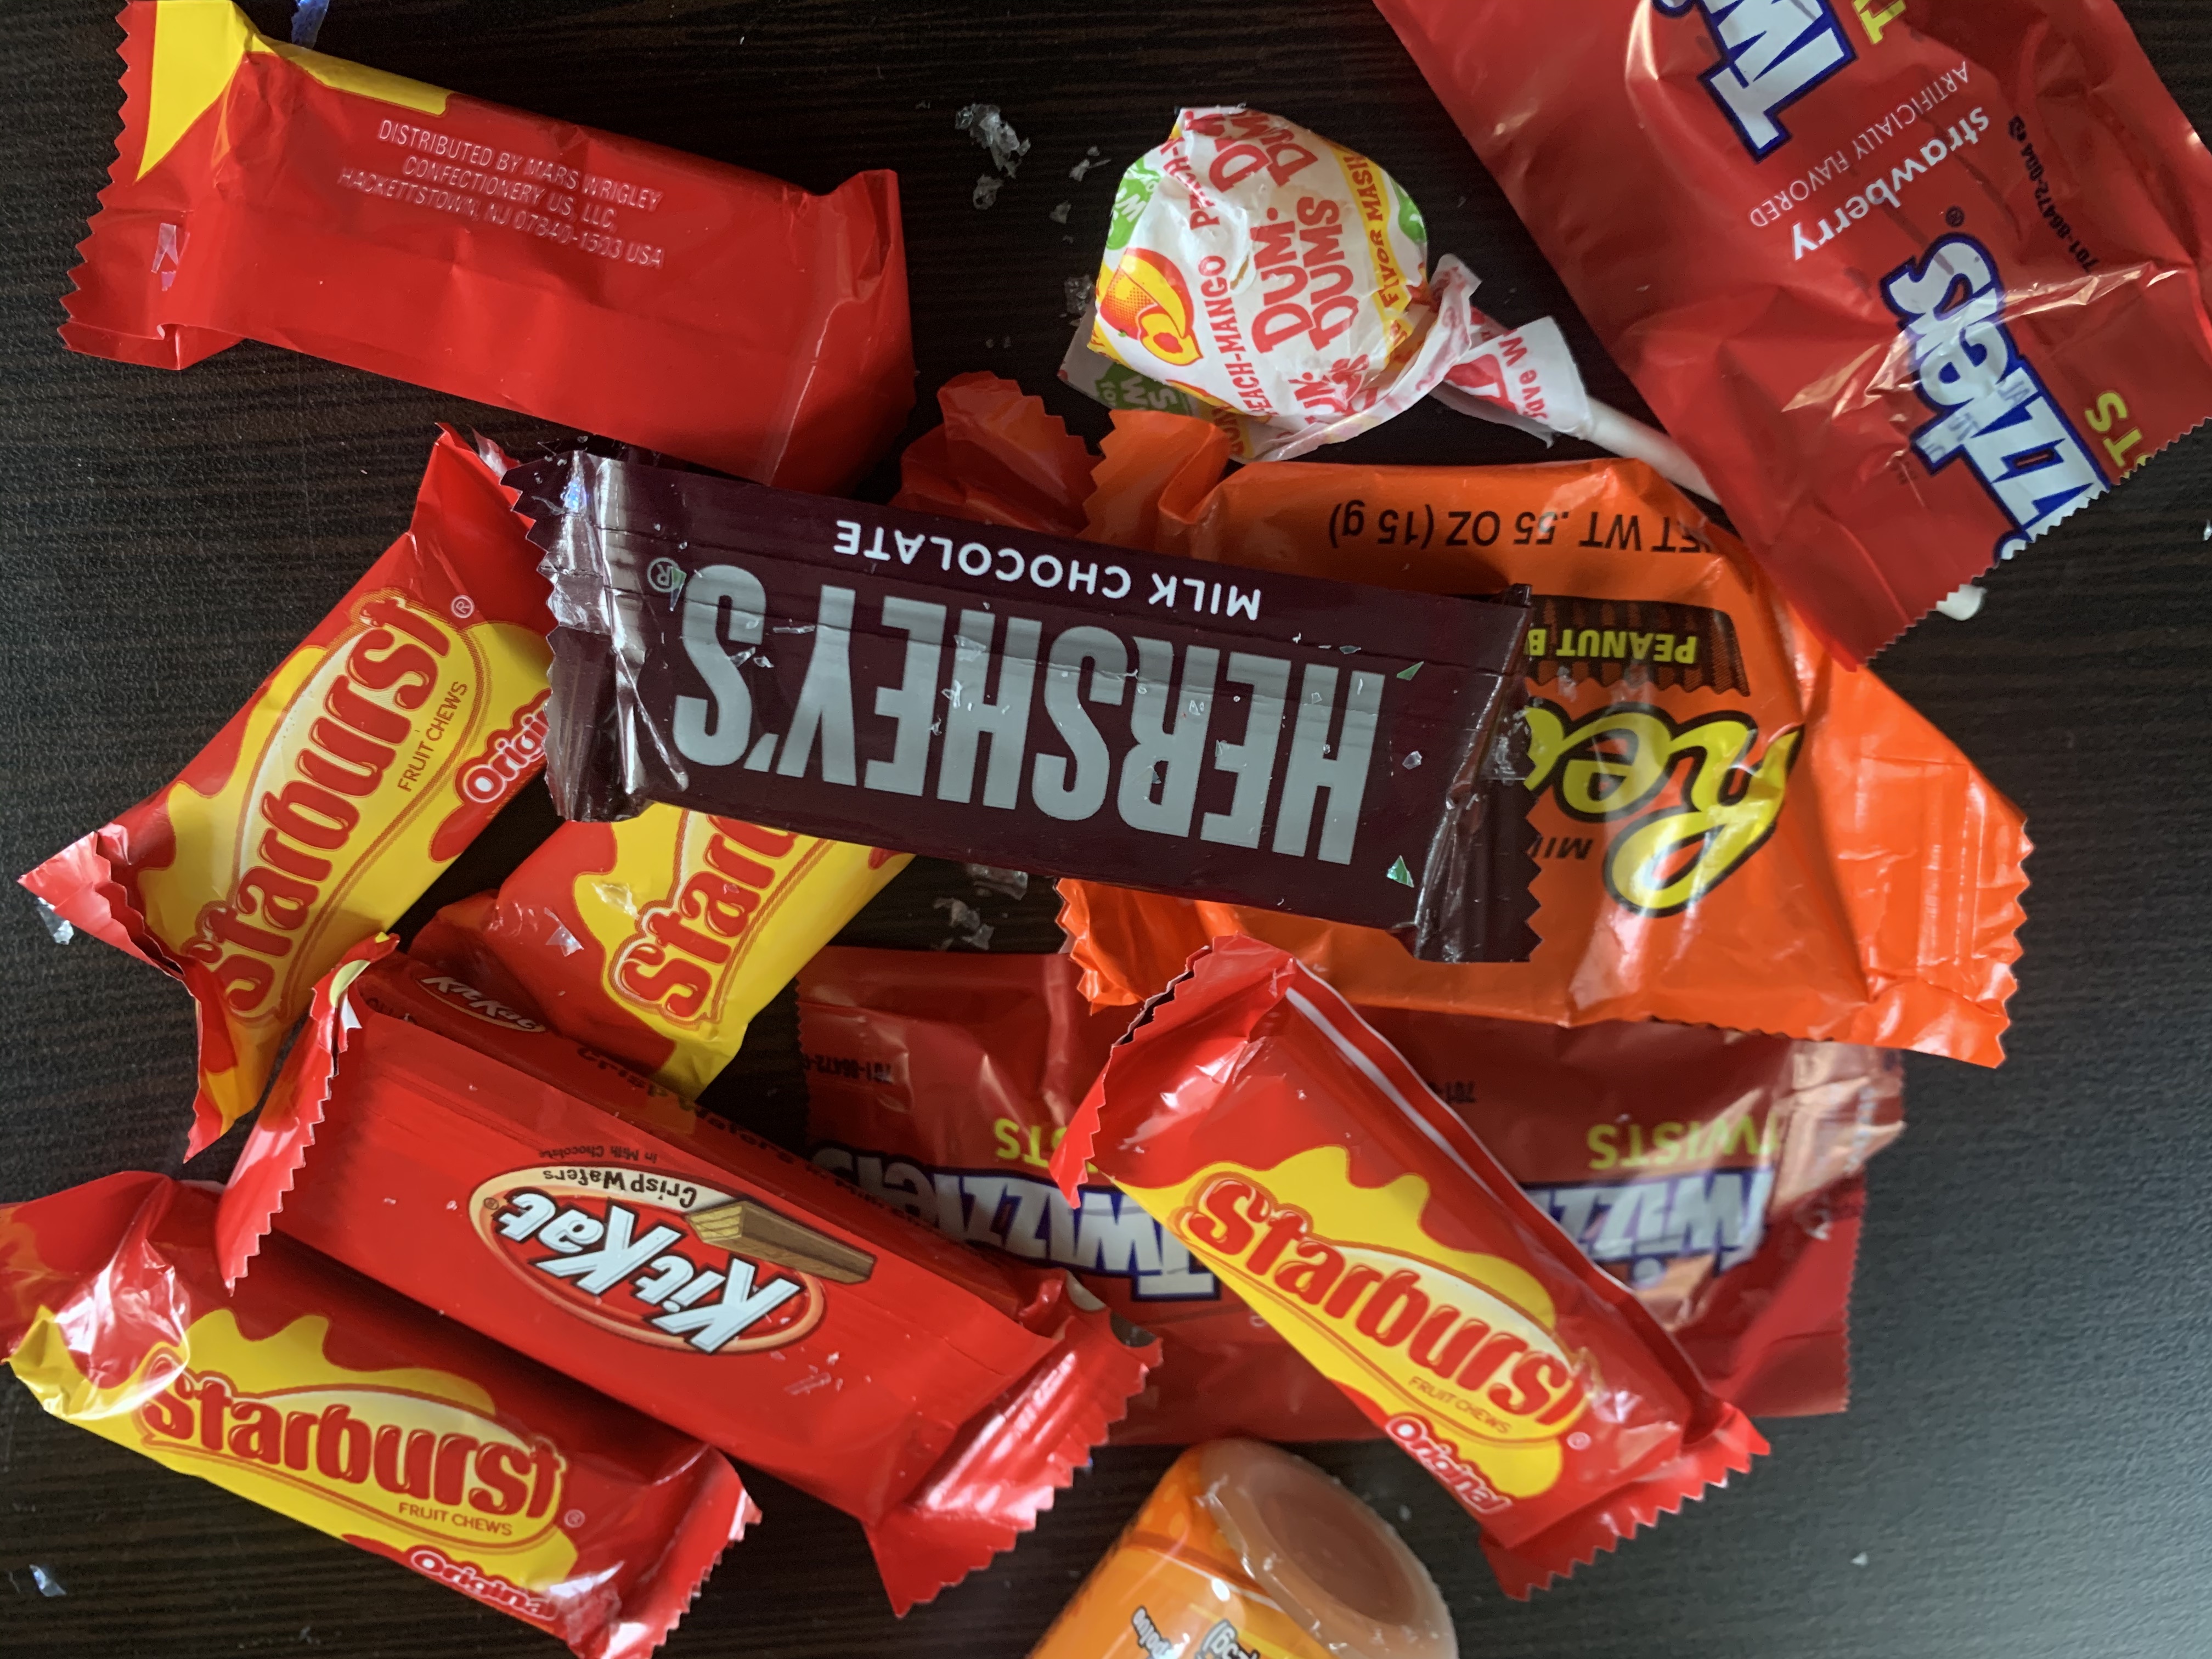 An assortment of different candy